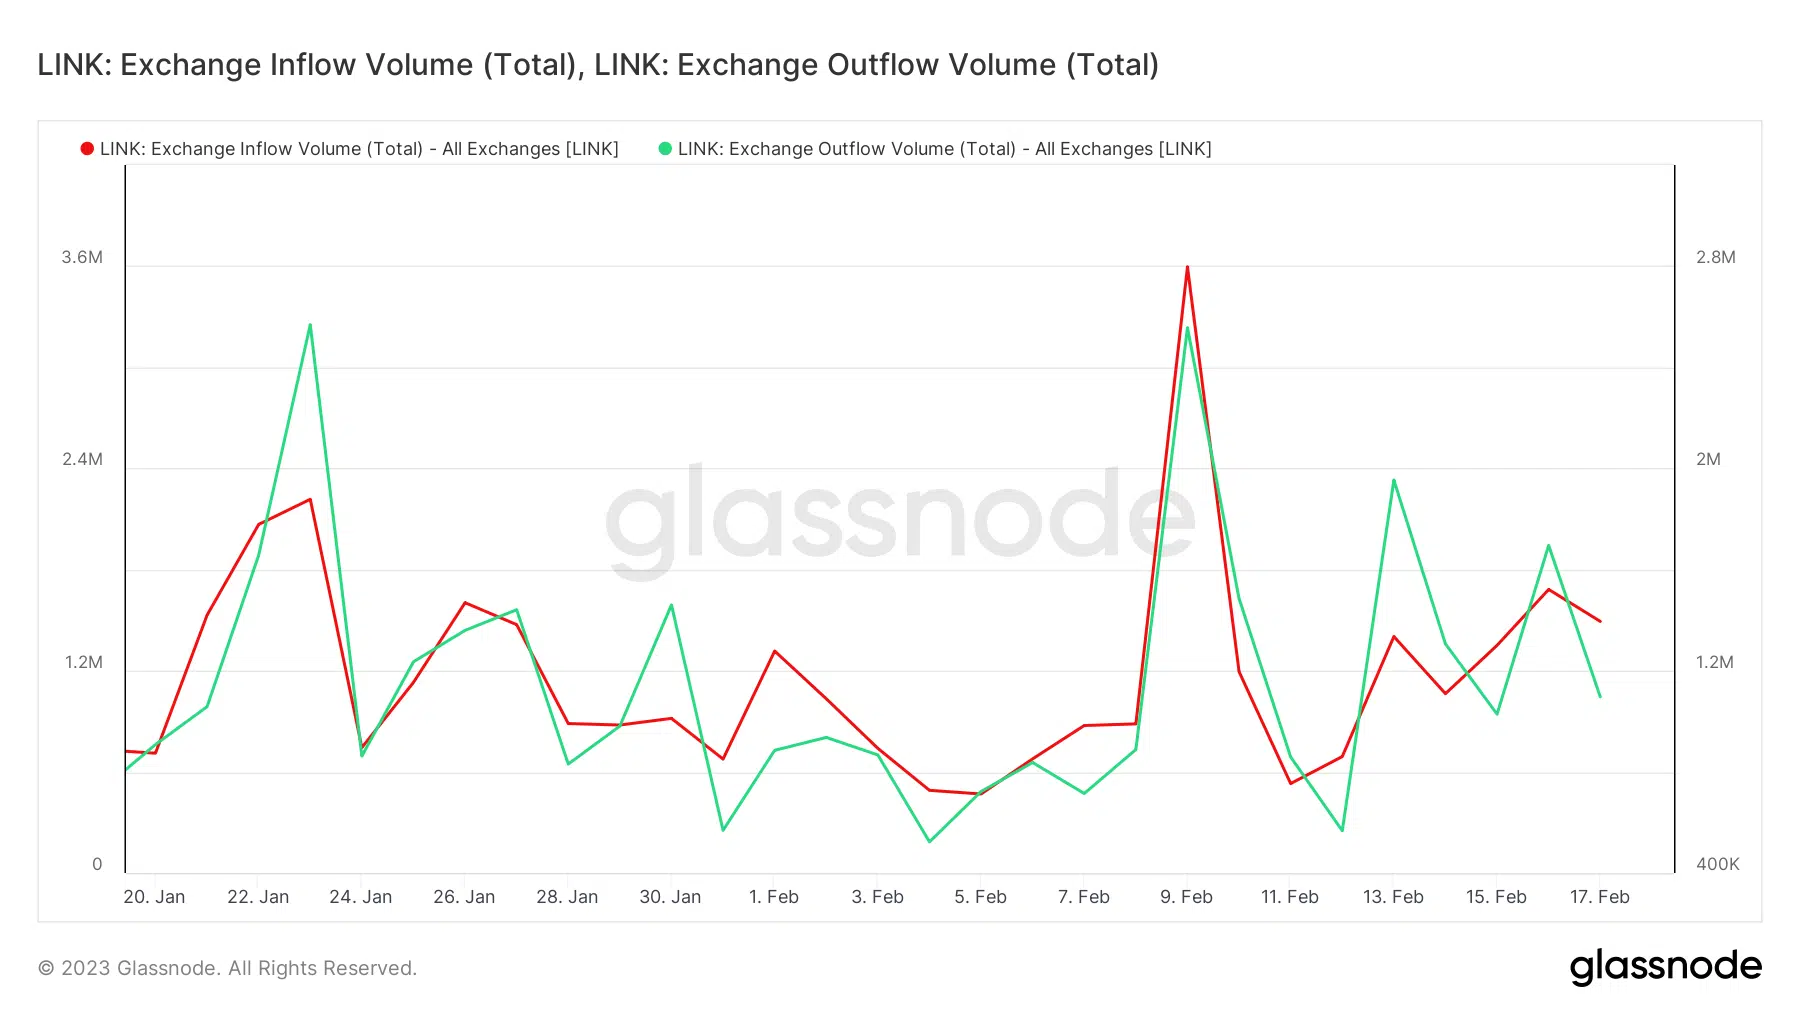 LINK exchange flows